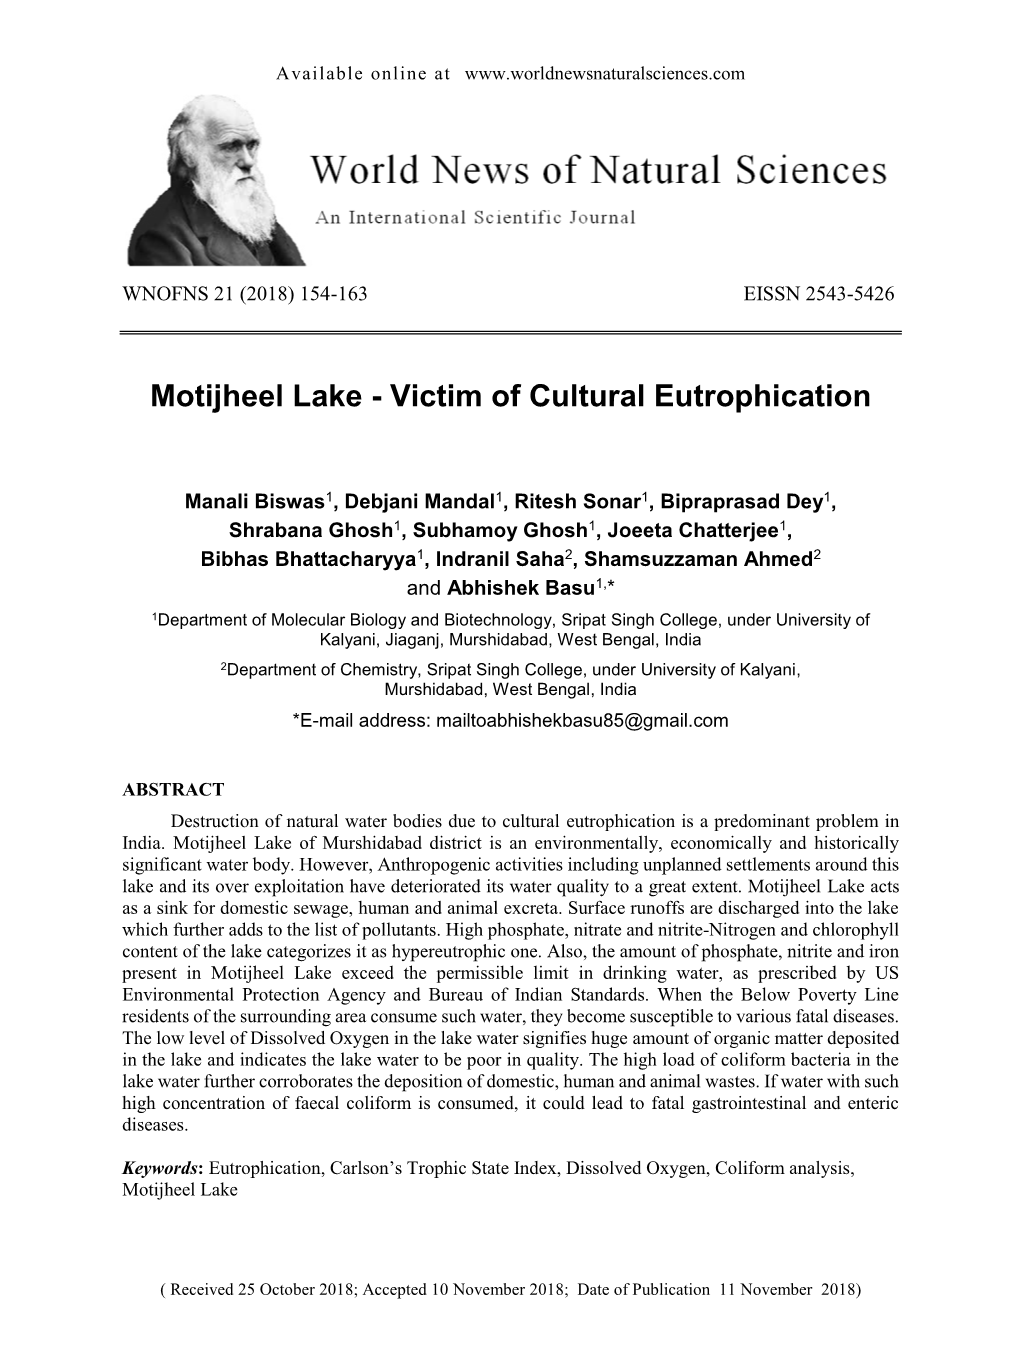 Motijheel Lake - Victim of Cultural Eutrophication